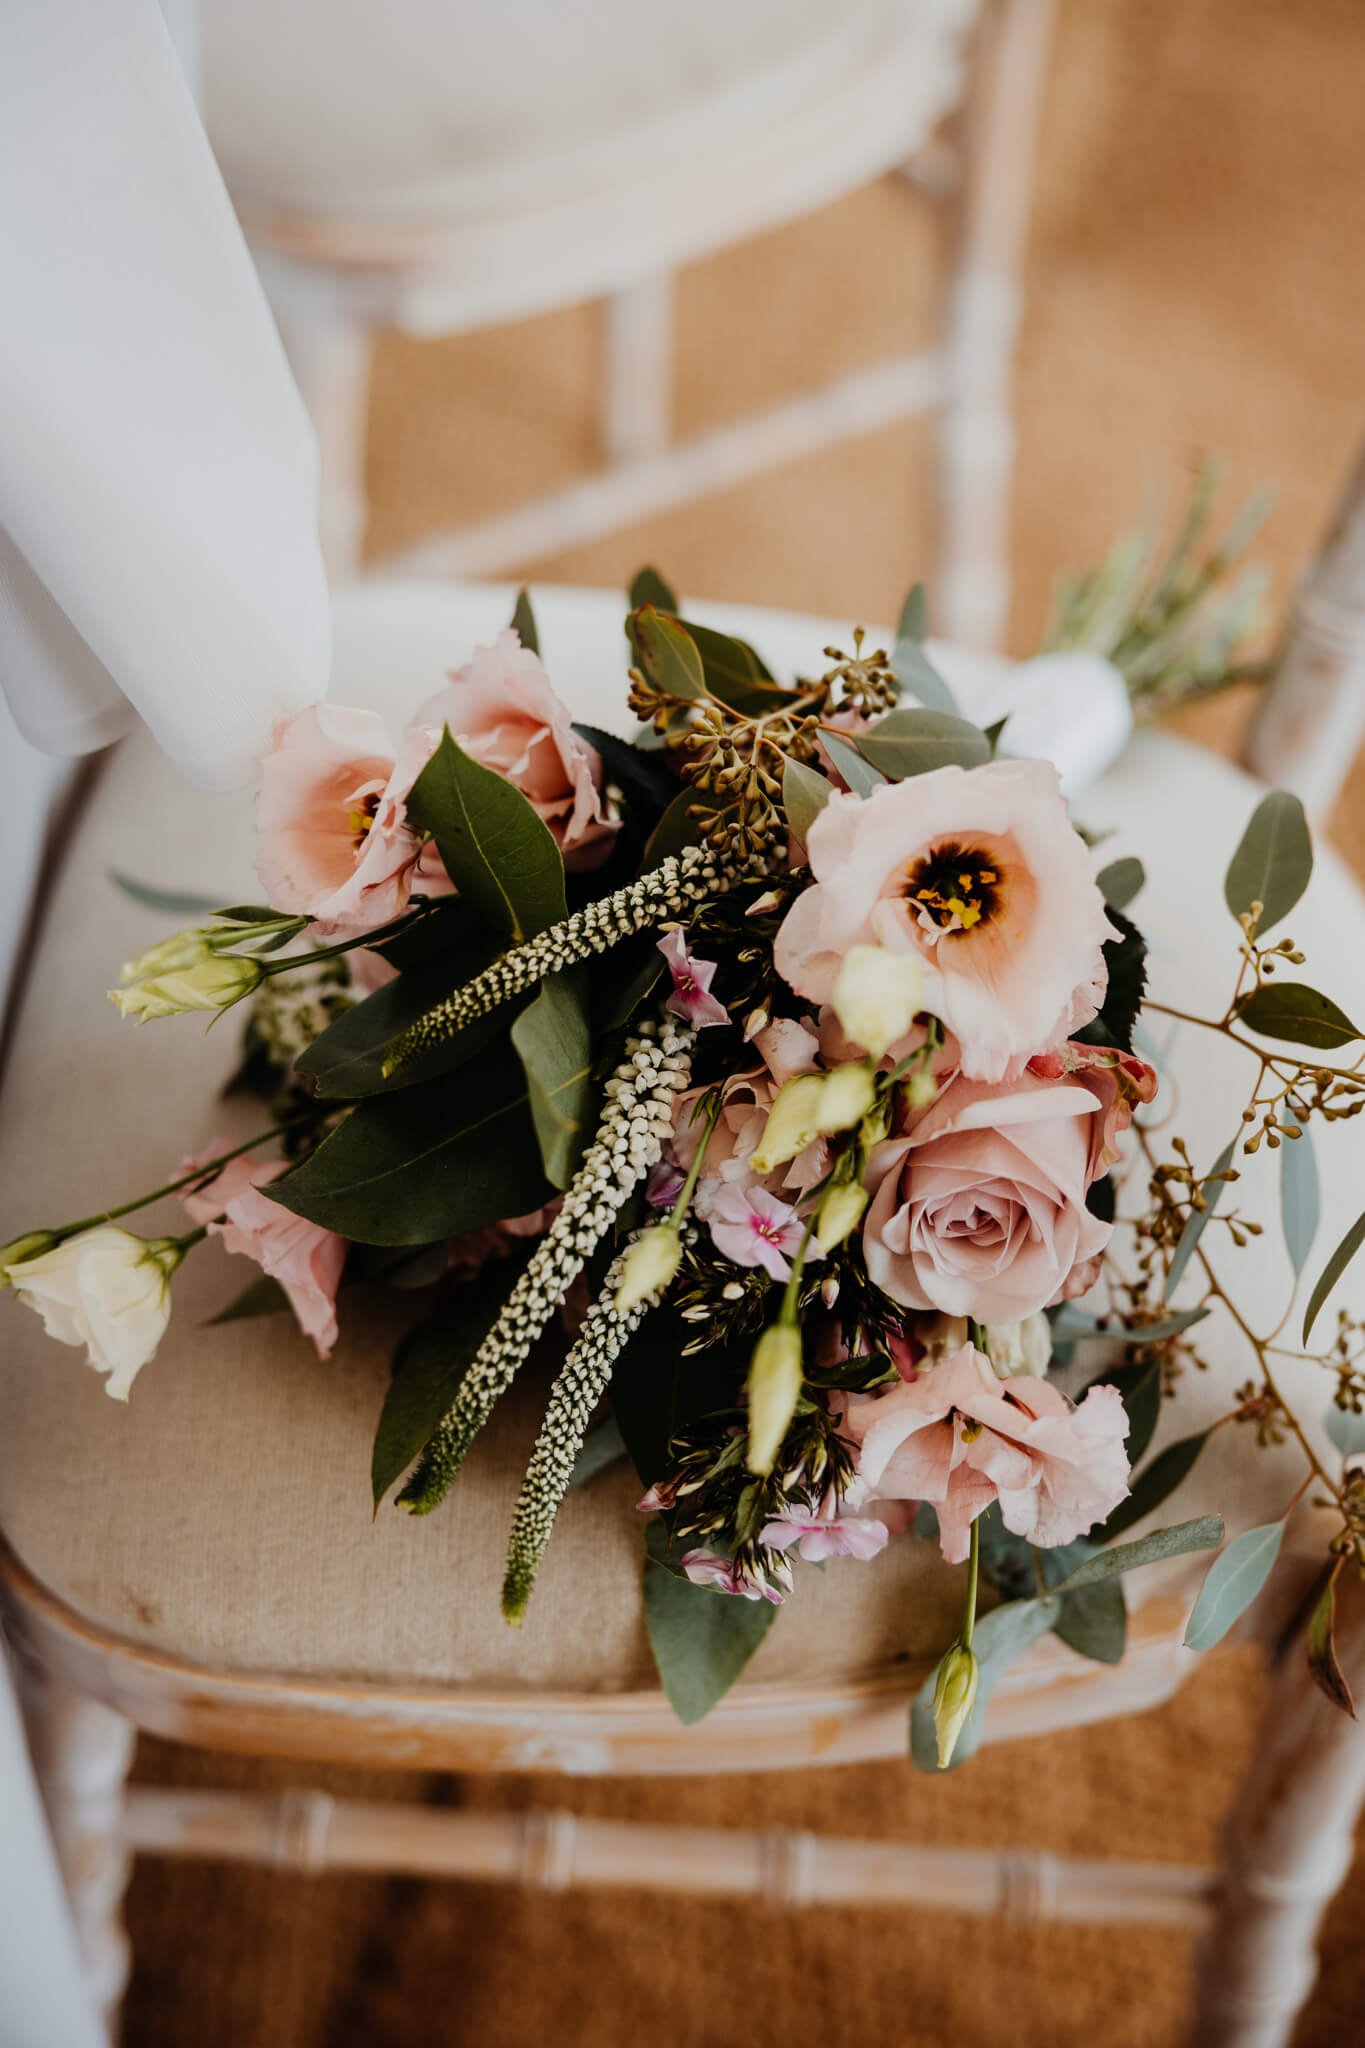 Beth-Shean-Wedding-flowers-3.jpg